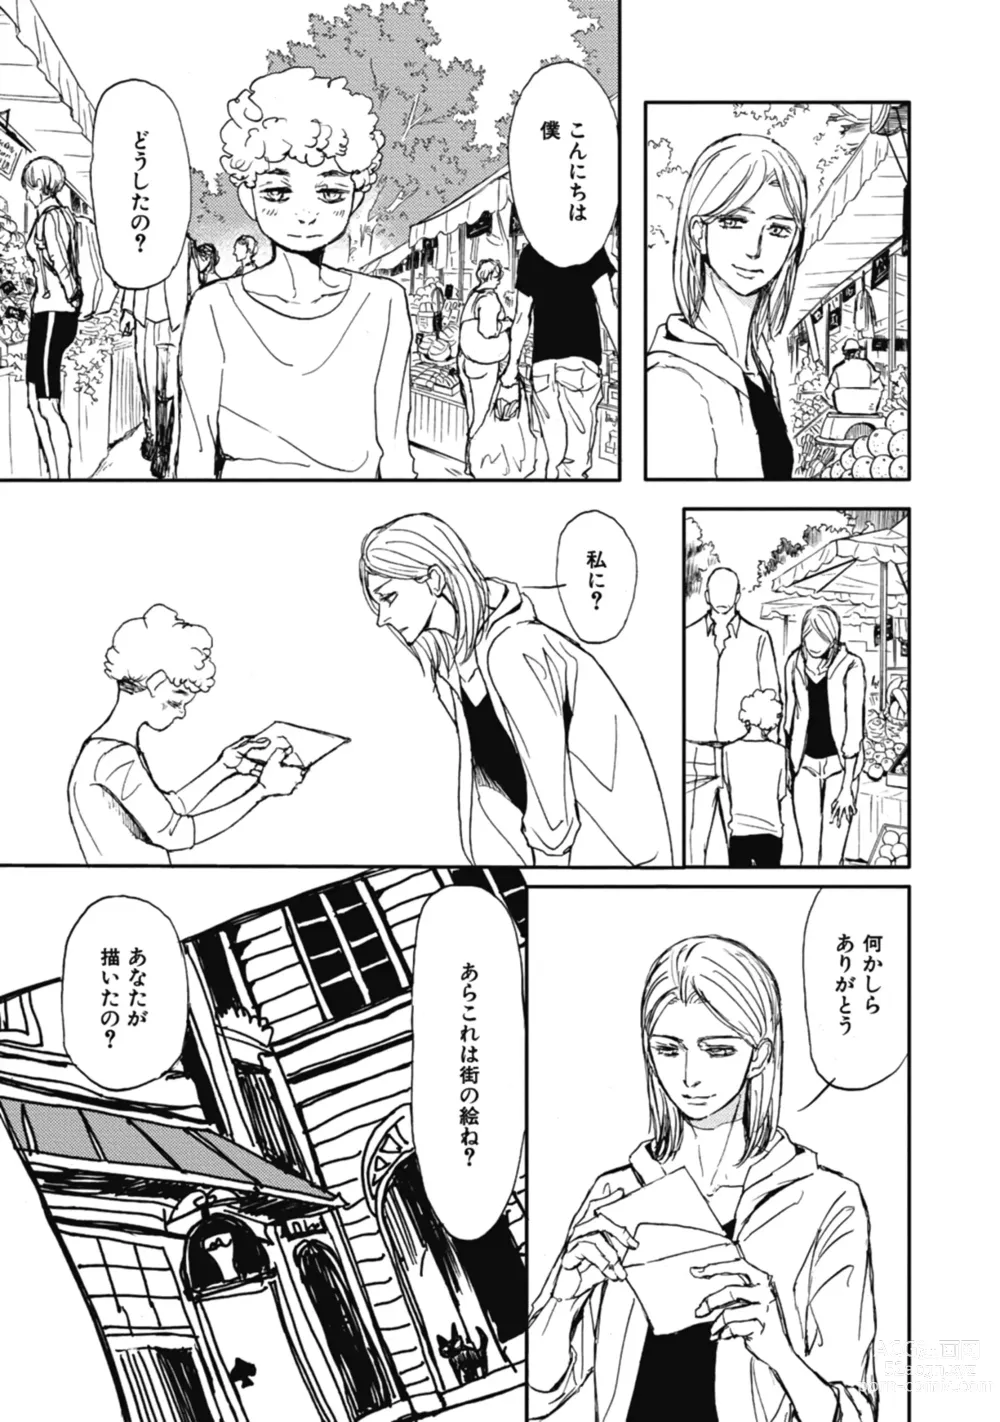 Page 9 of manga Papas Assassin. ~Futari Shite Tonde Yuku.~